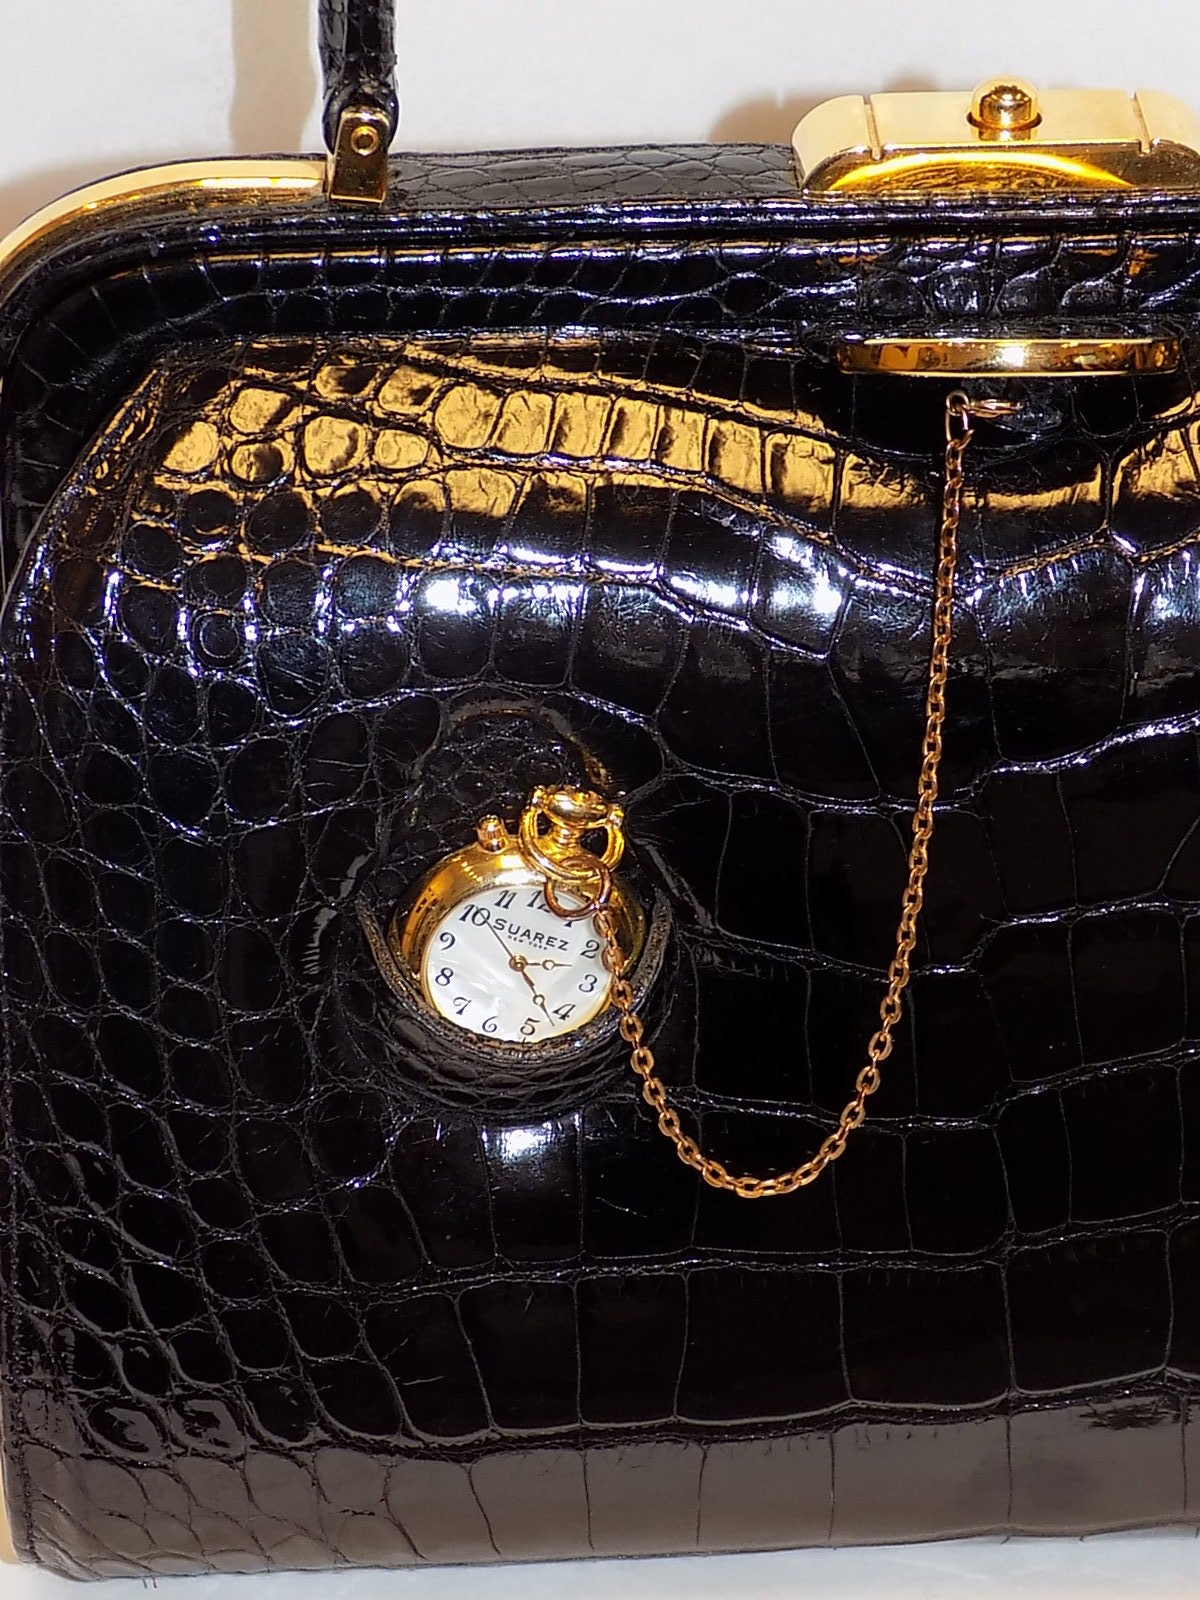 Women's Suarez vintage alligator bag with pocket watch